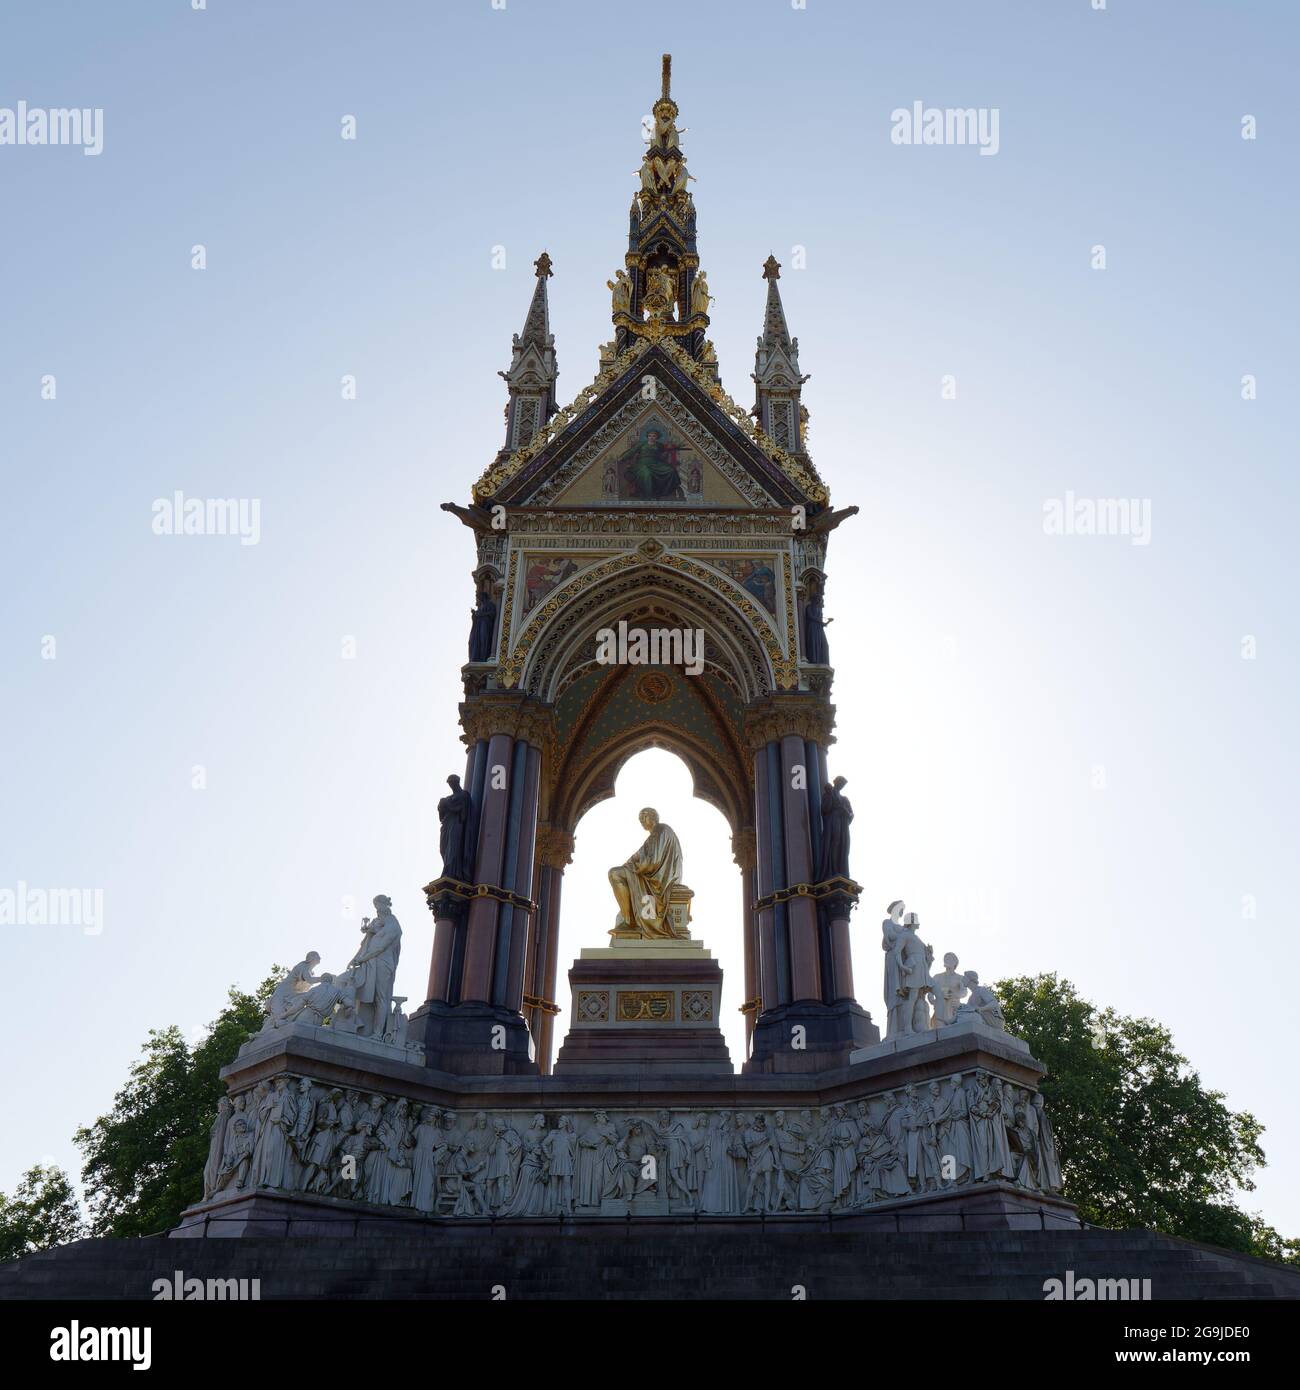 Londres, Grand Londres, Angleterre, juillet 17 2021 : l'Albert Memorial à la mémoire de Prince Albert, mari de la reine Victoria. Banque D'Images